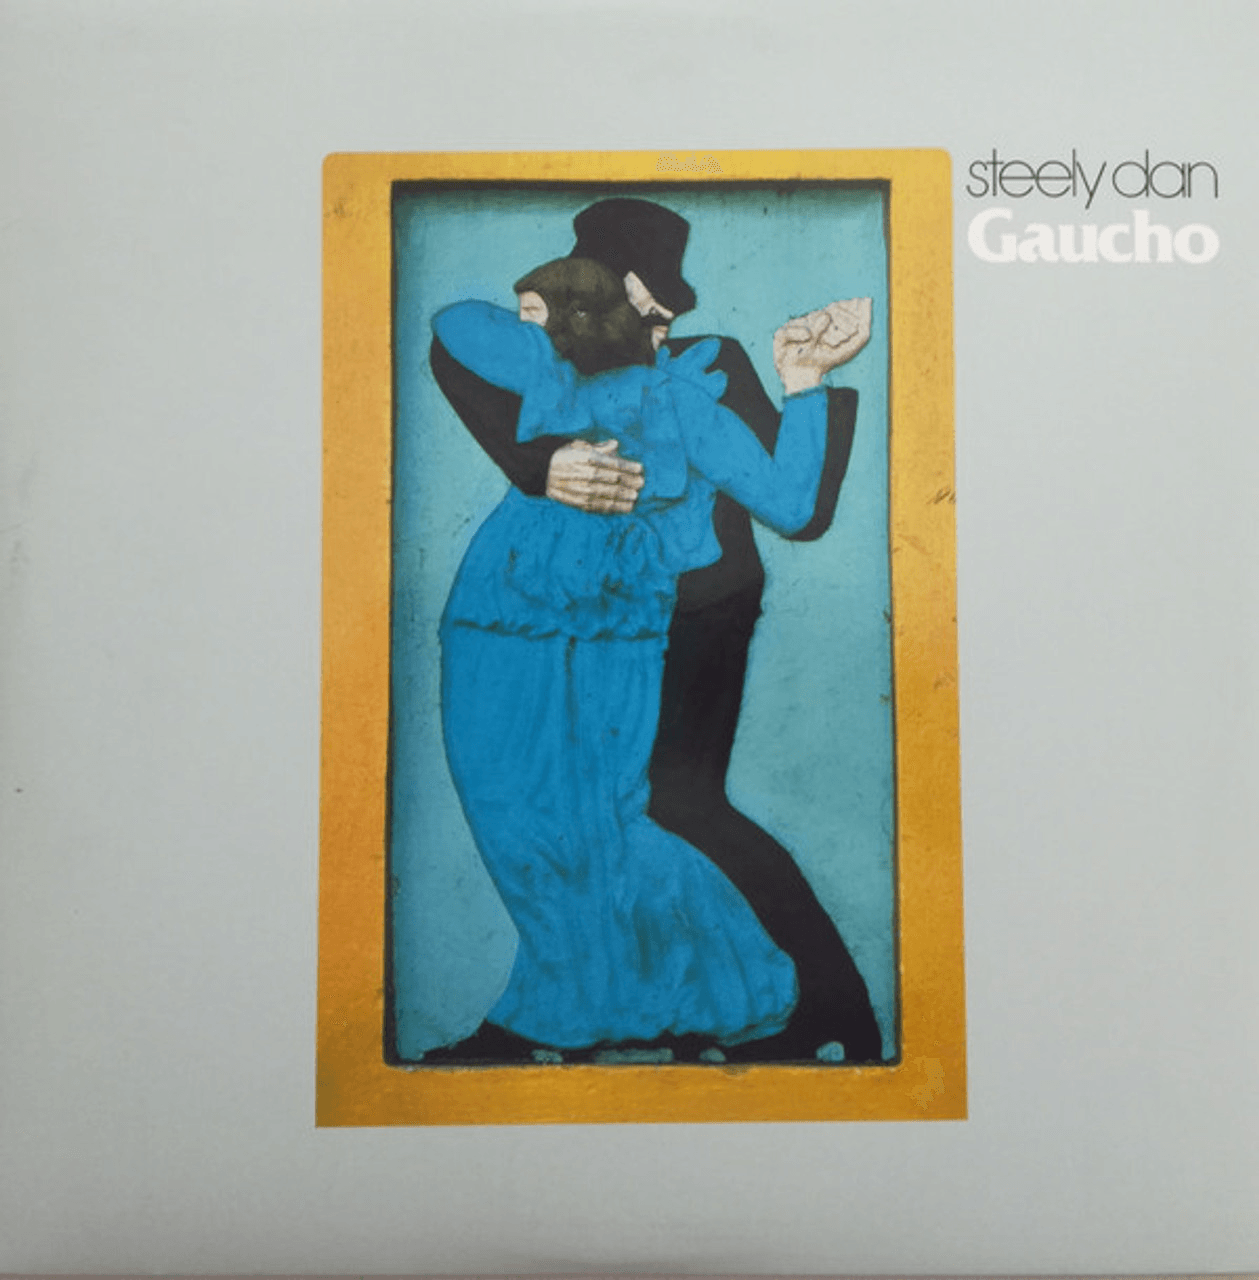 STEELY DAN - Gaucho Vinyl - JWrayRecords